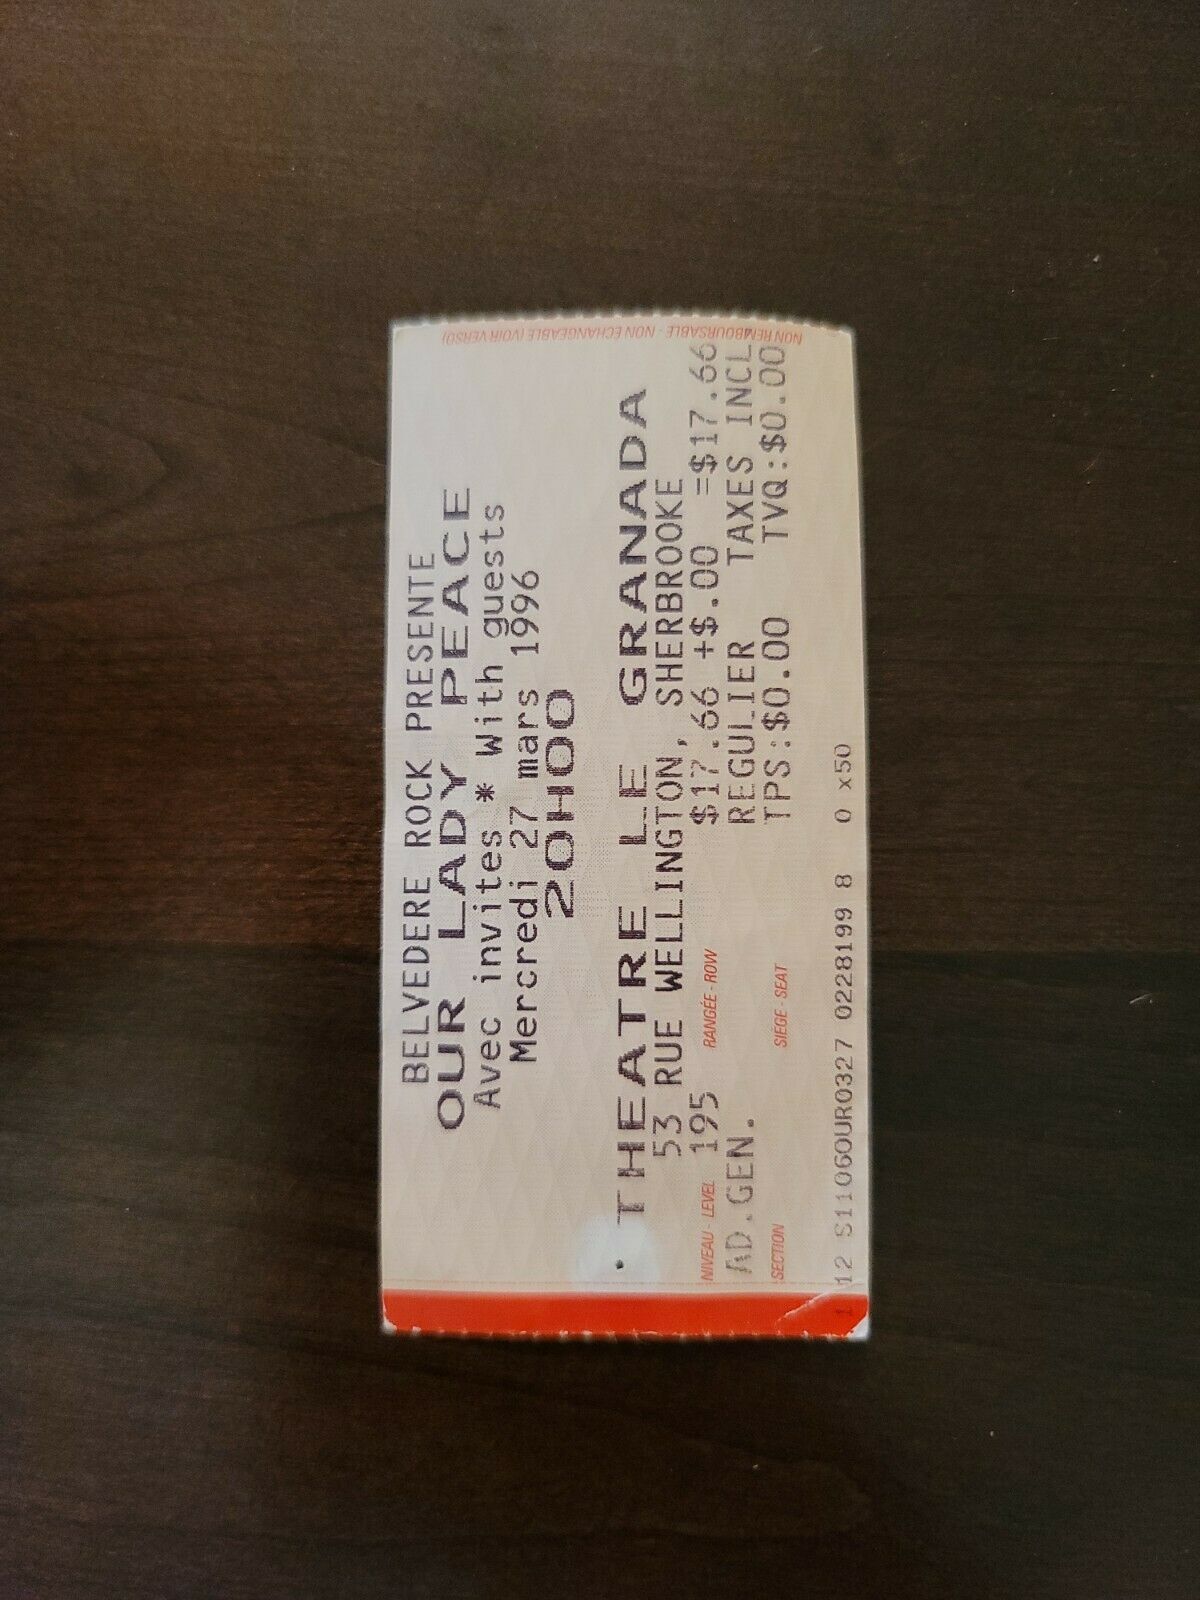 Our Lady Peace 1996, Sherbrooke Theatre Le Granada Original Concert Ticket Stub